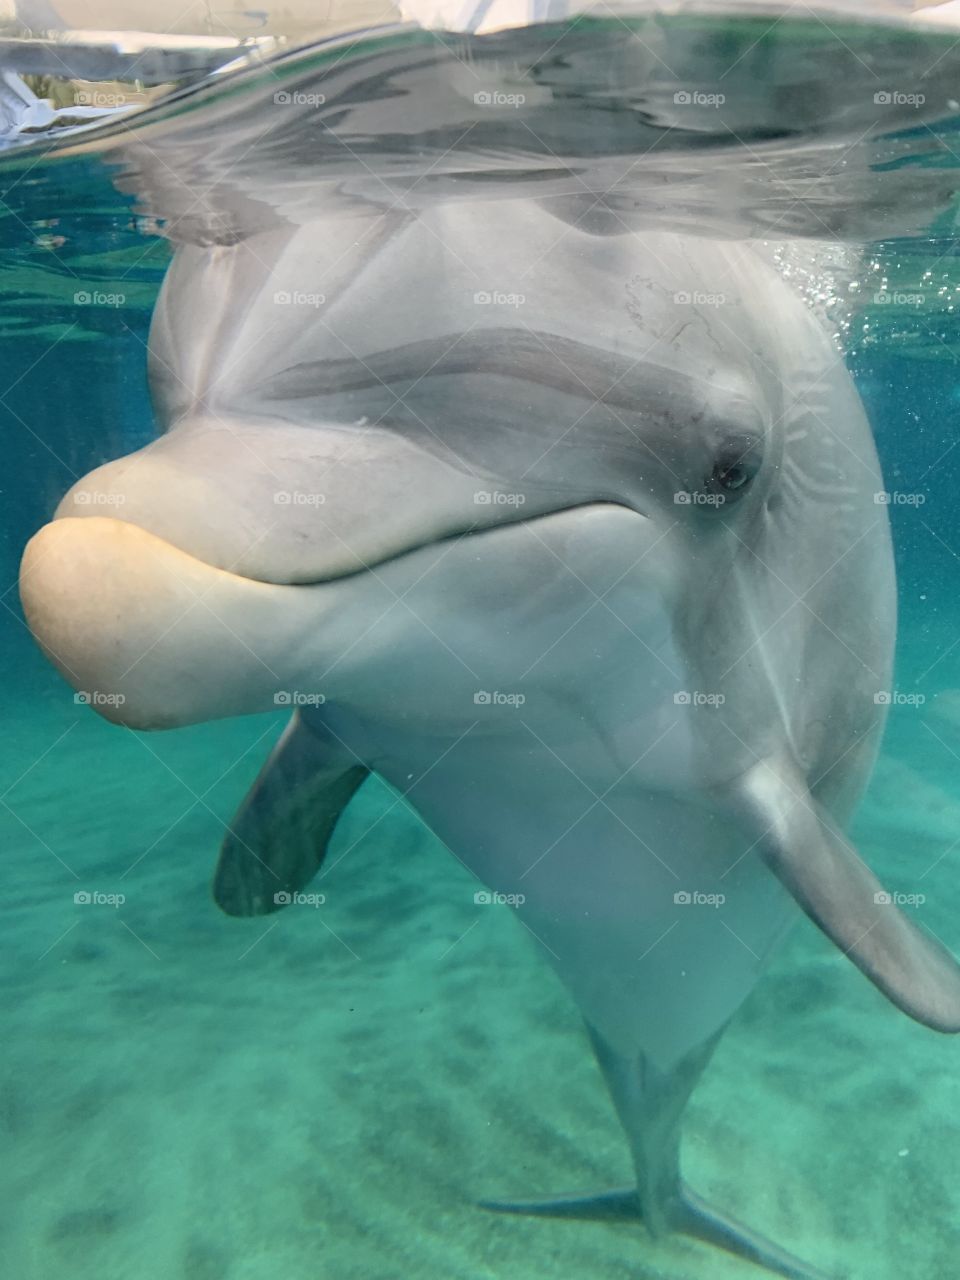 #day74 111319 SeaWorld Orlando.  Meet baby dolphin, Storm! Join me in the fun @Selsa_Susanna highlights or https://www.facebook.com/selsa.susanna